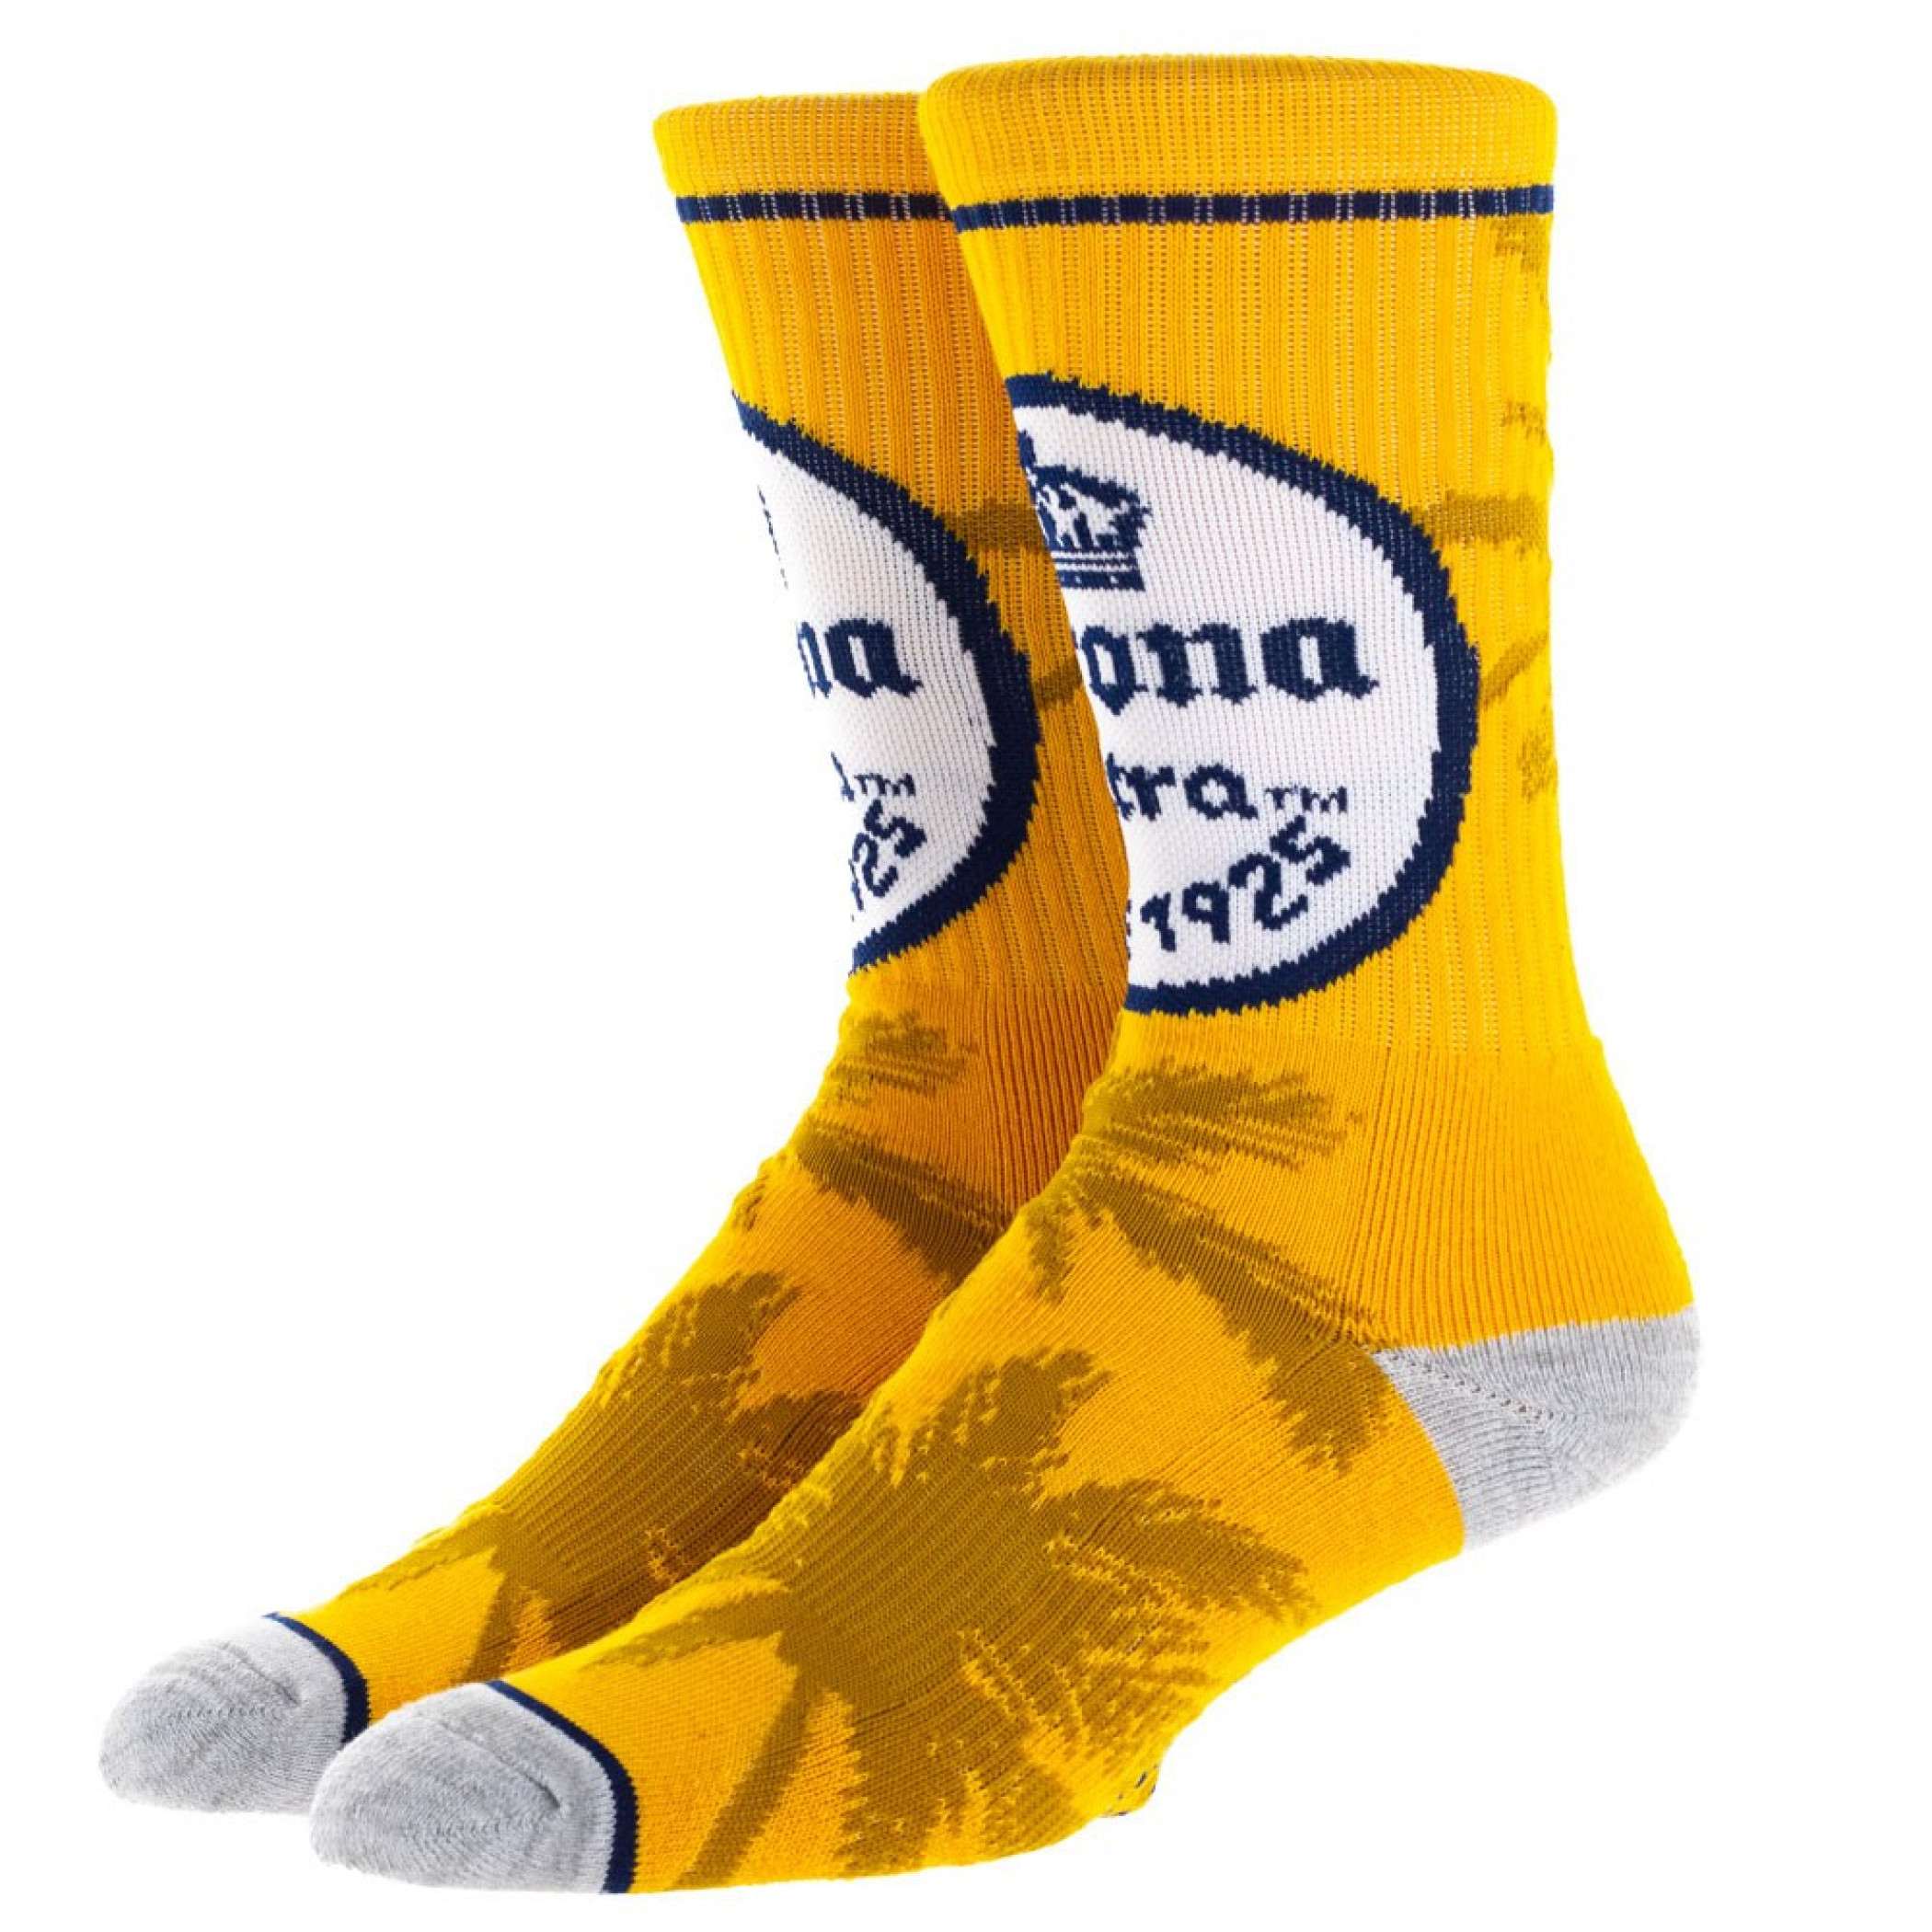 Corona Symbols and Branding 3-Pair Pack of Crew Socks